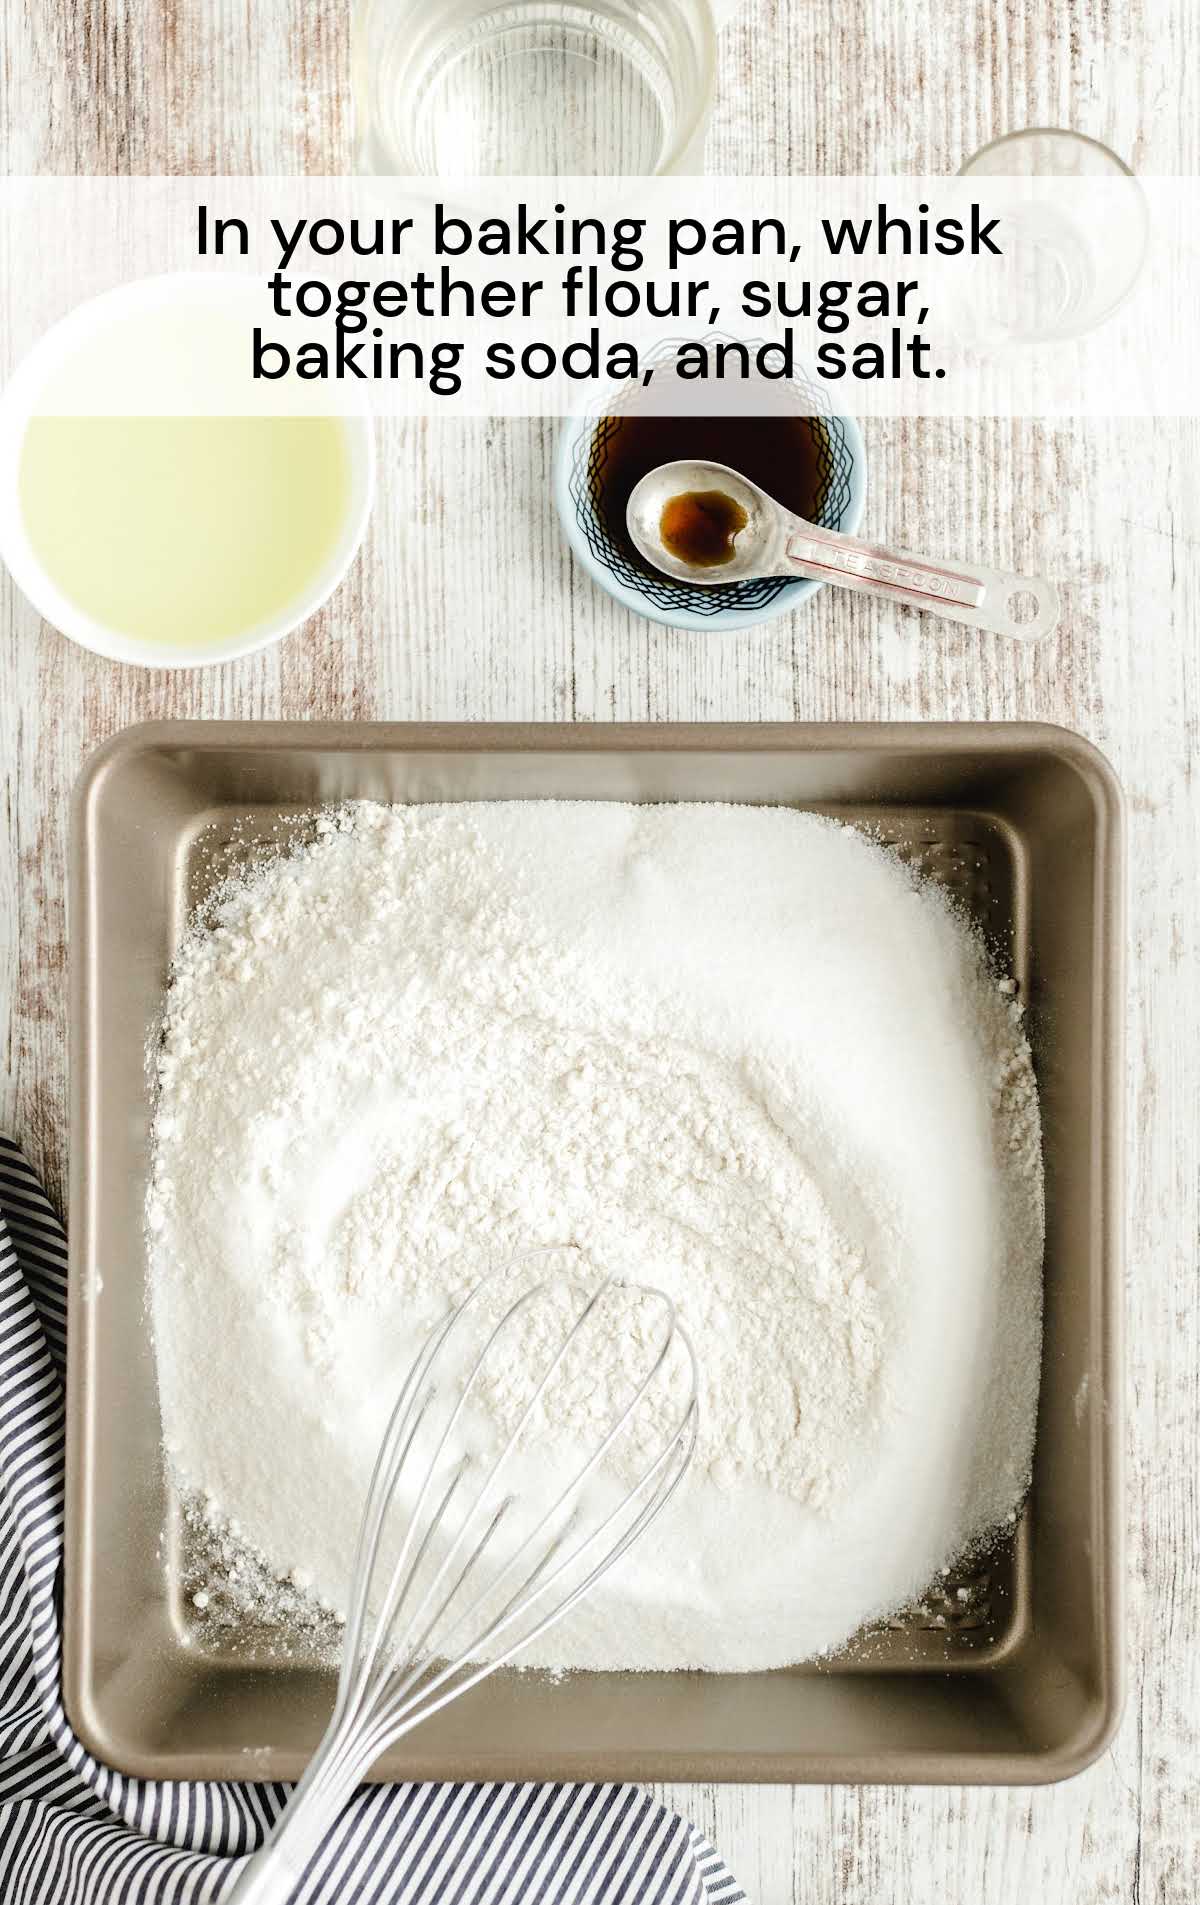 flour, sugar, baking soda, and salt whisked in a baking dish